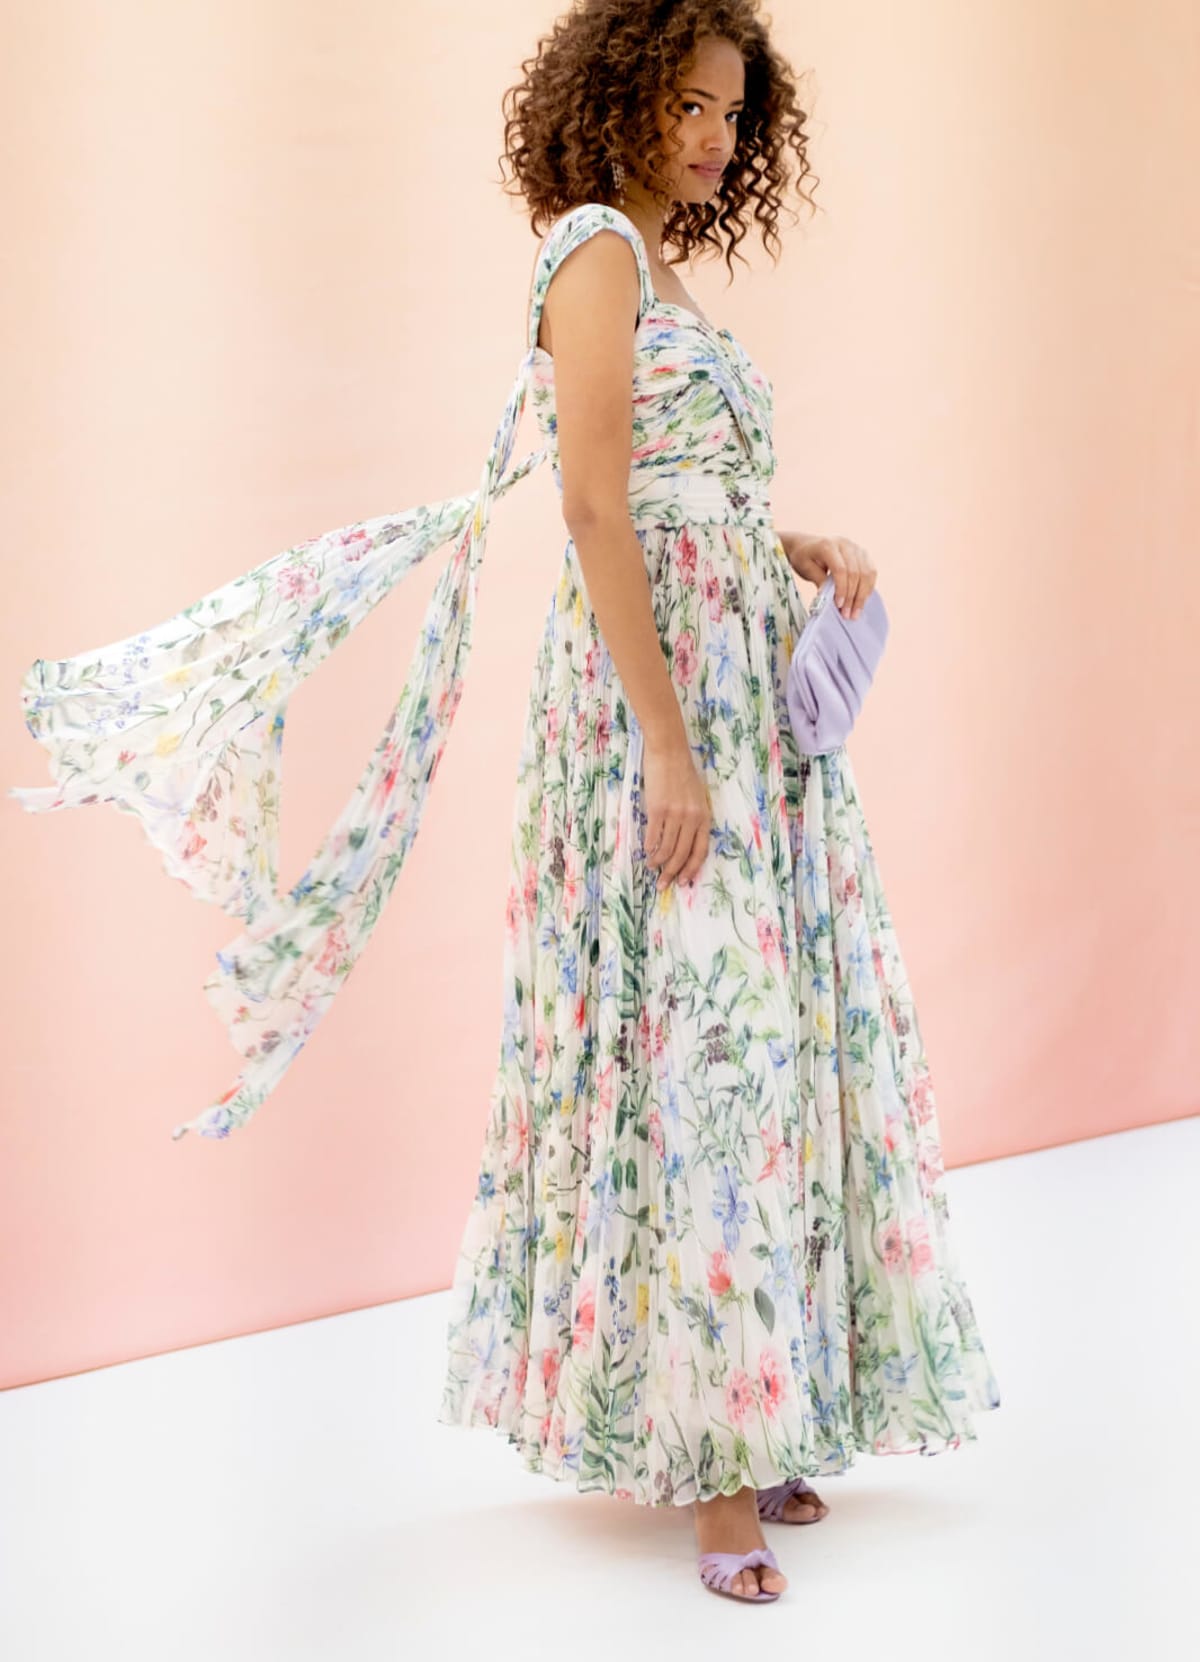 Woman wearing floral dress